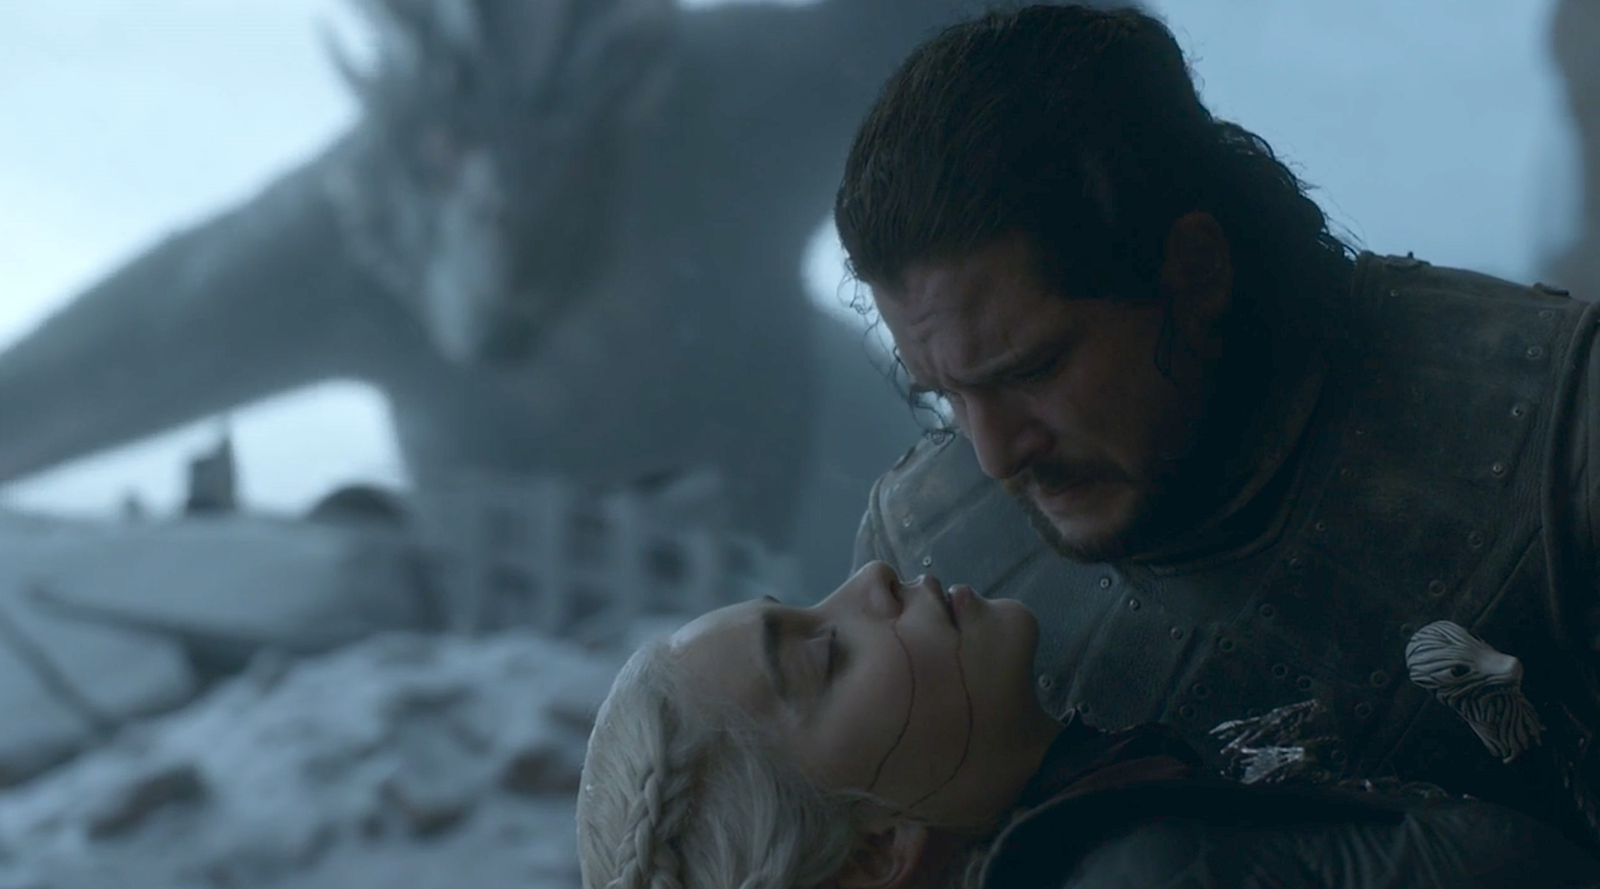 Jon Snow backstabs Daenerys Targaryen in the finale of Game of Thrones